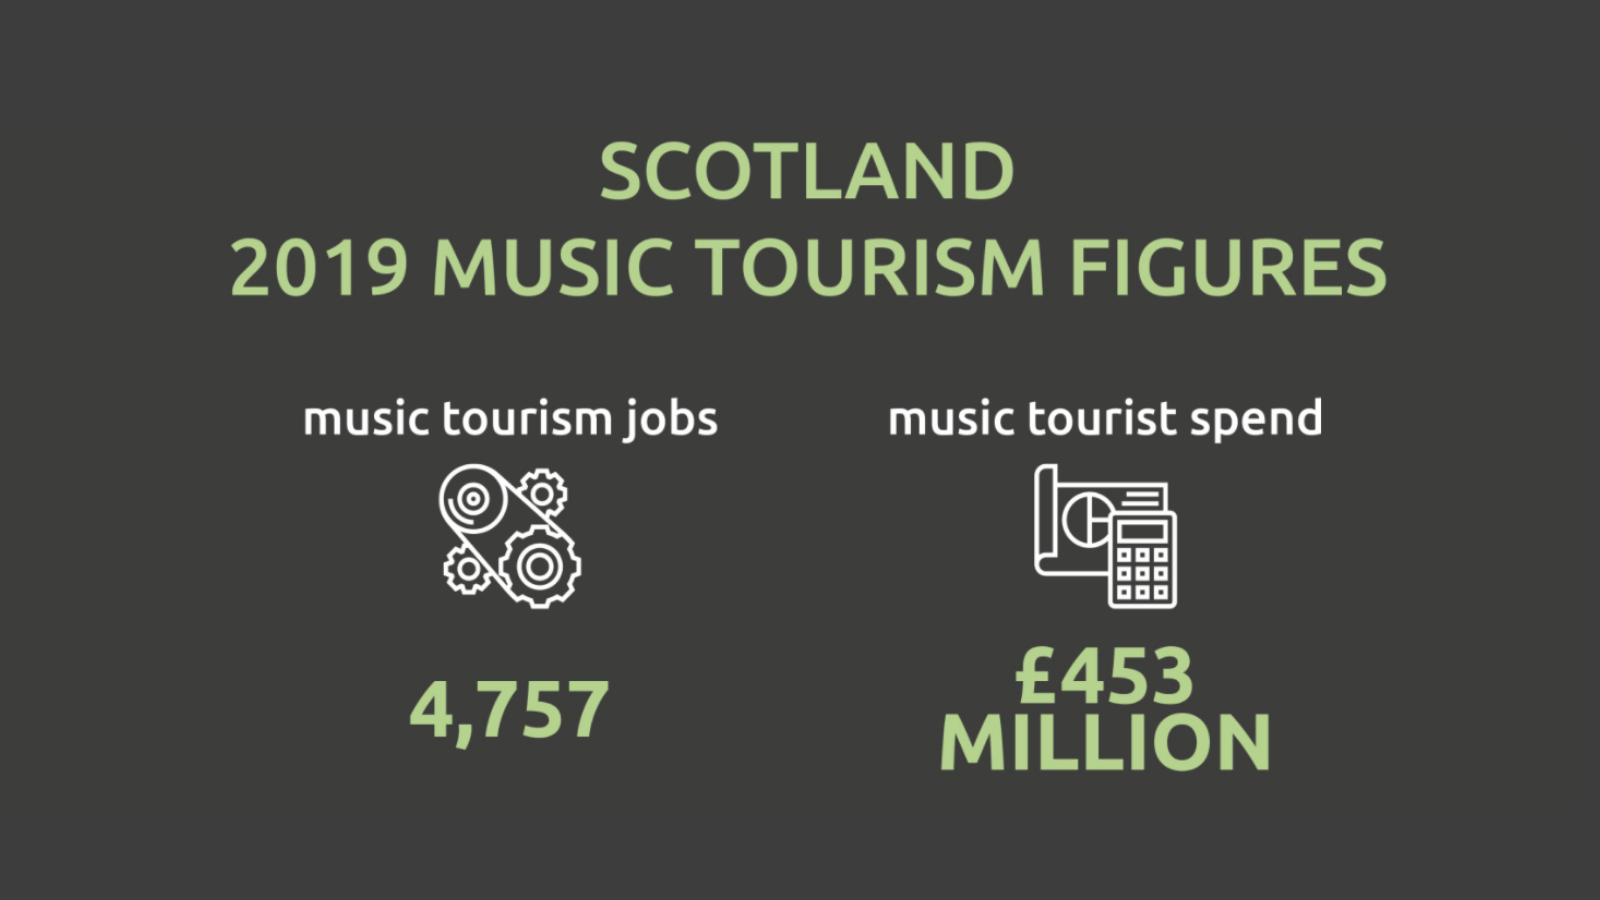 Scotland 2019 music tourism data map reveals industry’s vital economic contribution